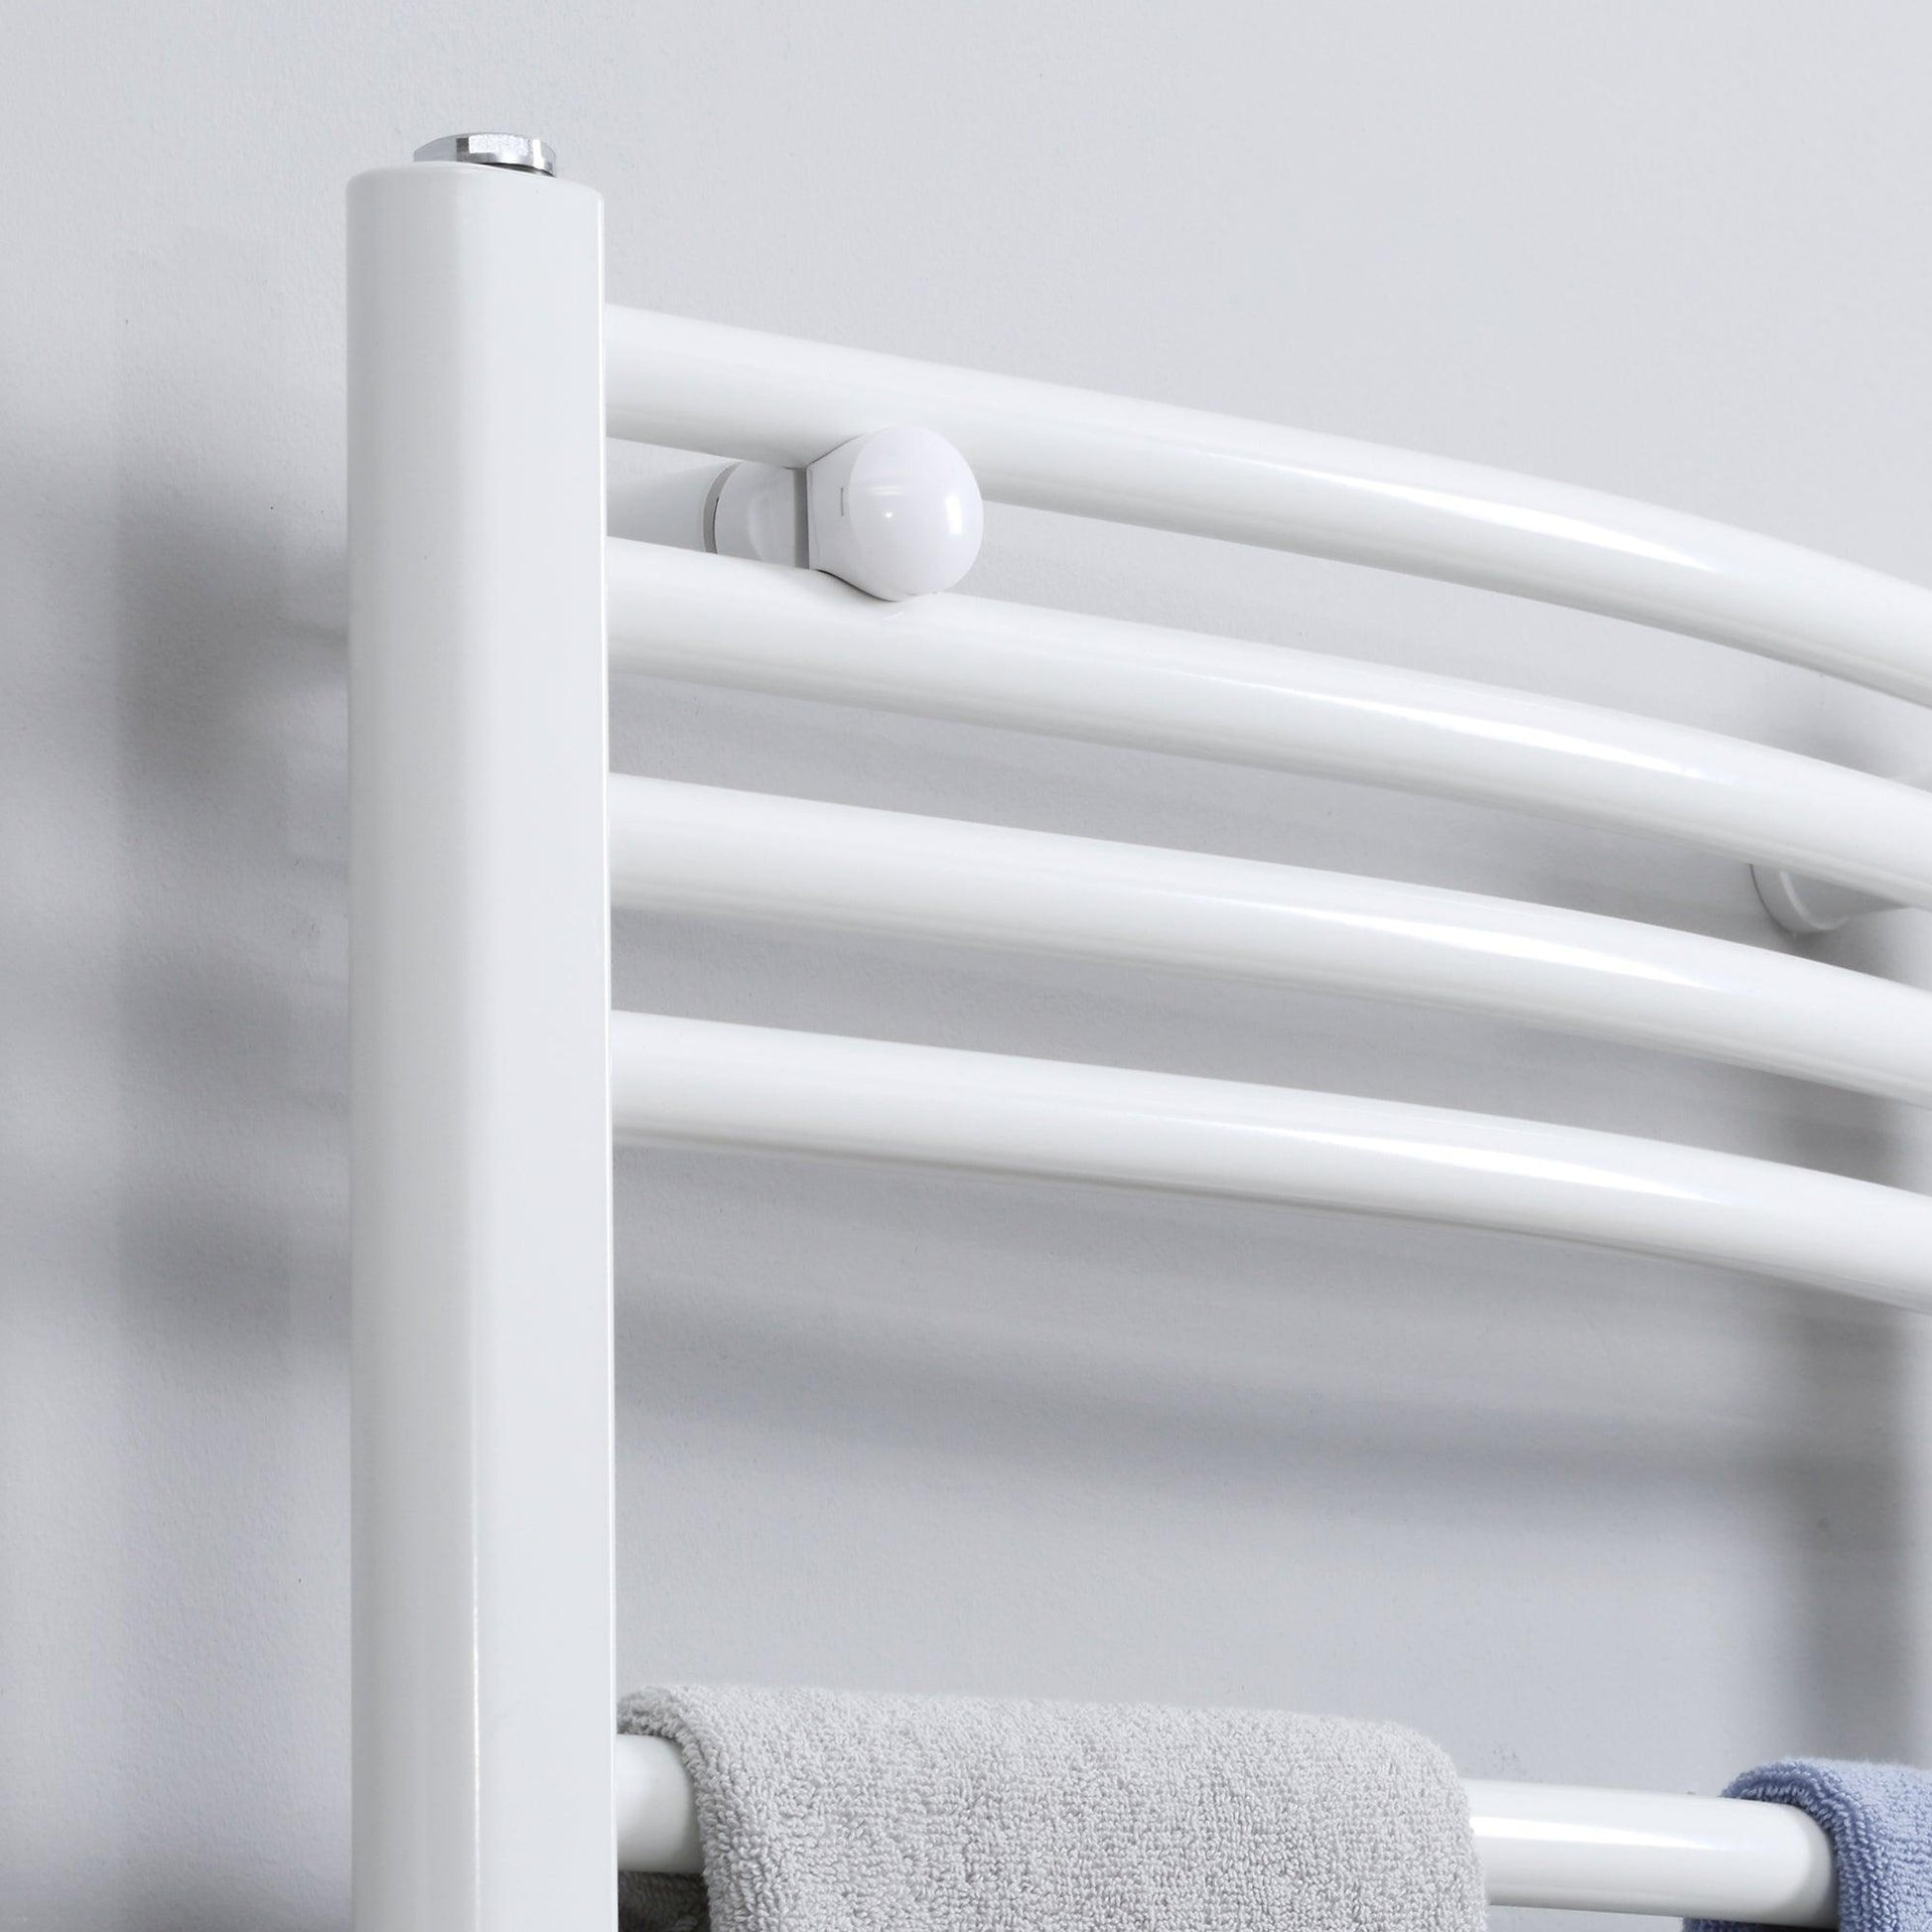 HOMCOM Heated Towel Rail: Hydronic Bathroom Warmer - ALL4U RETAILER LTD